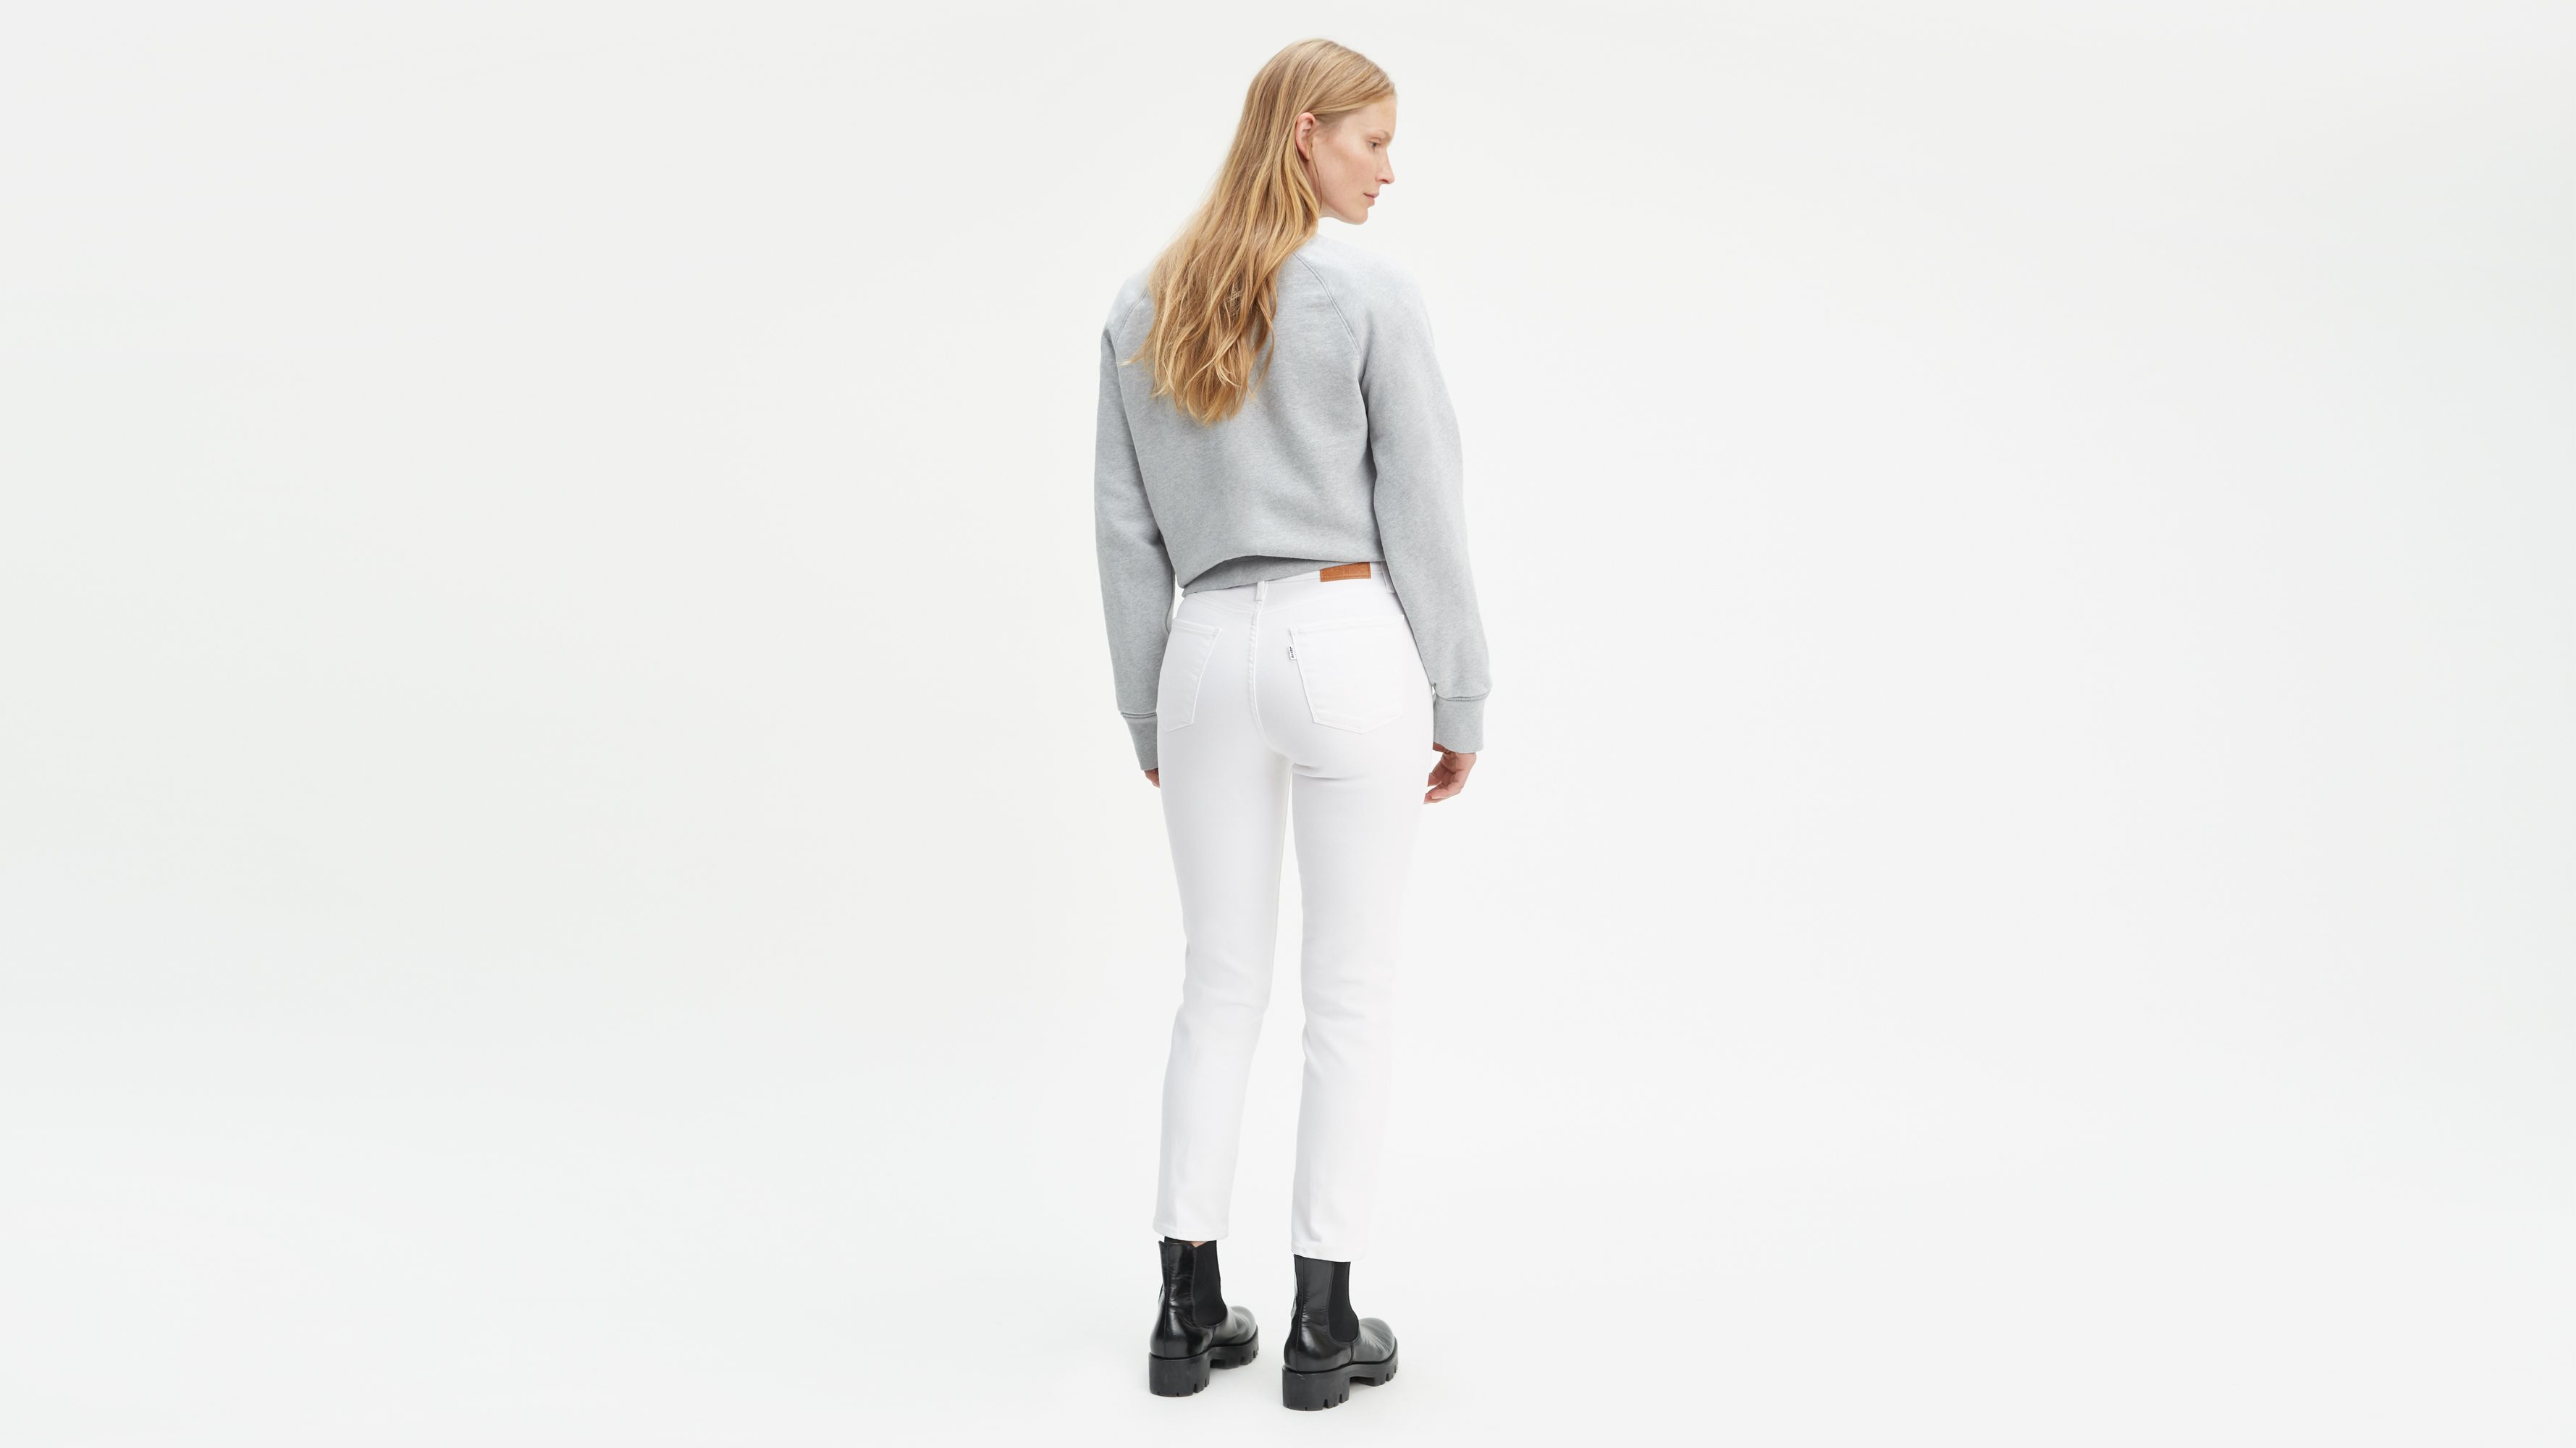 womens white levi jeans